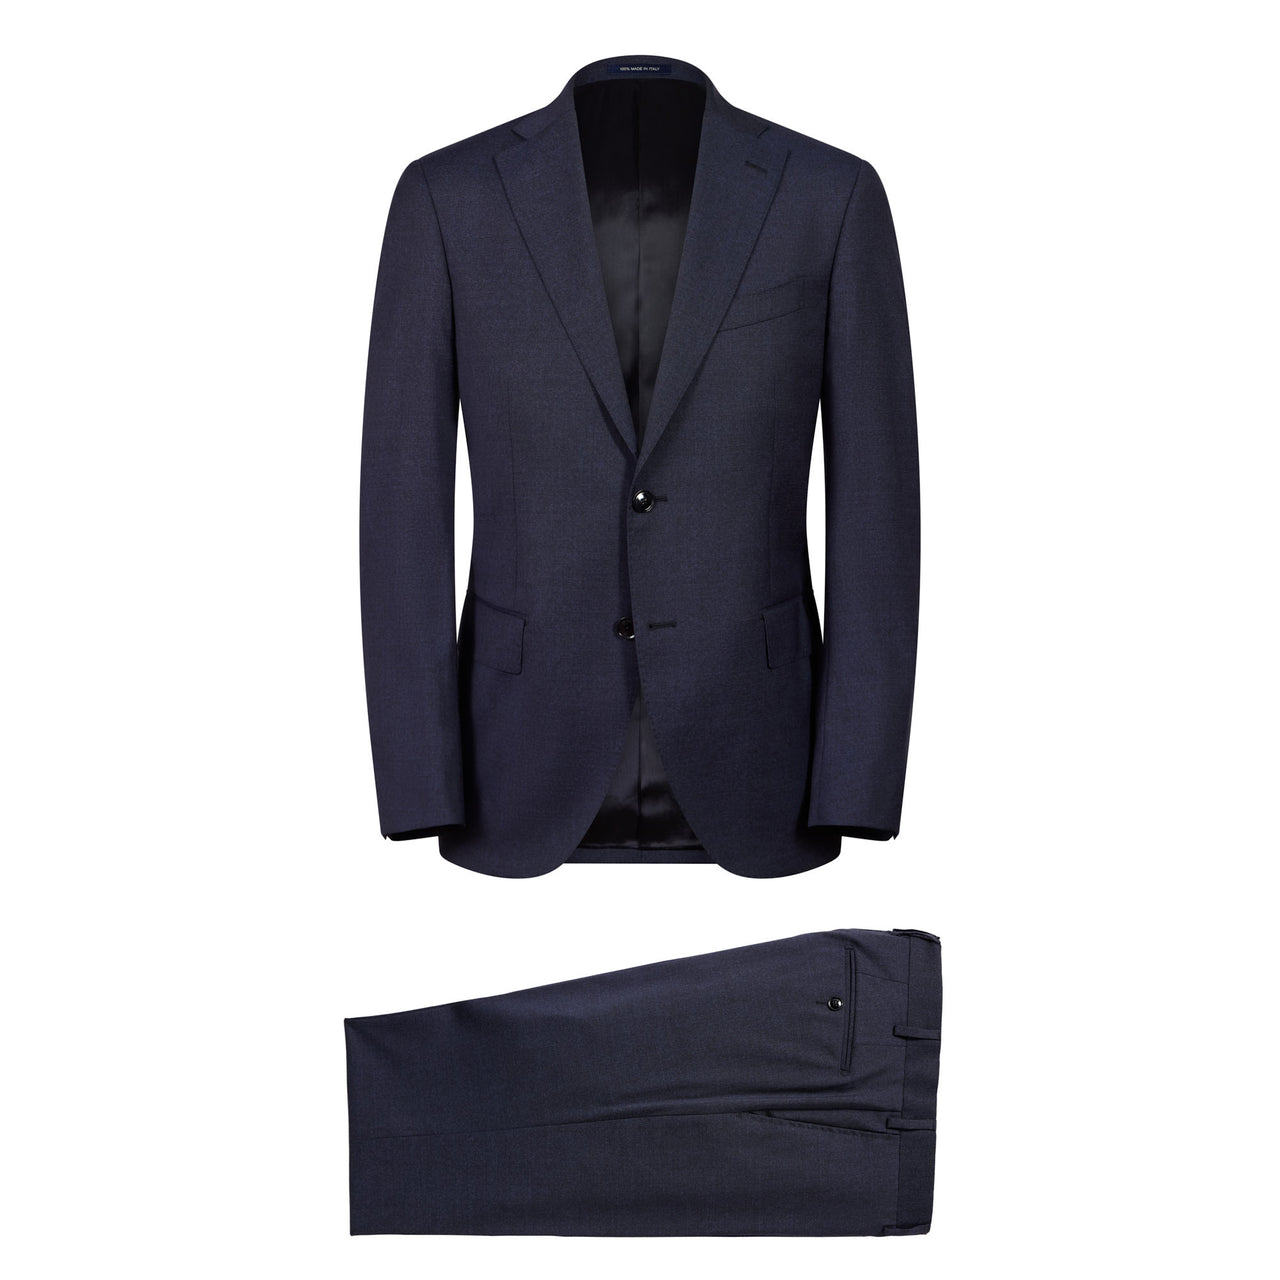 HENRY SARTORIAL X LATORRE Modello Suit NAVY BLUE